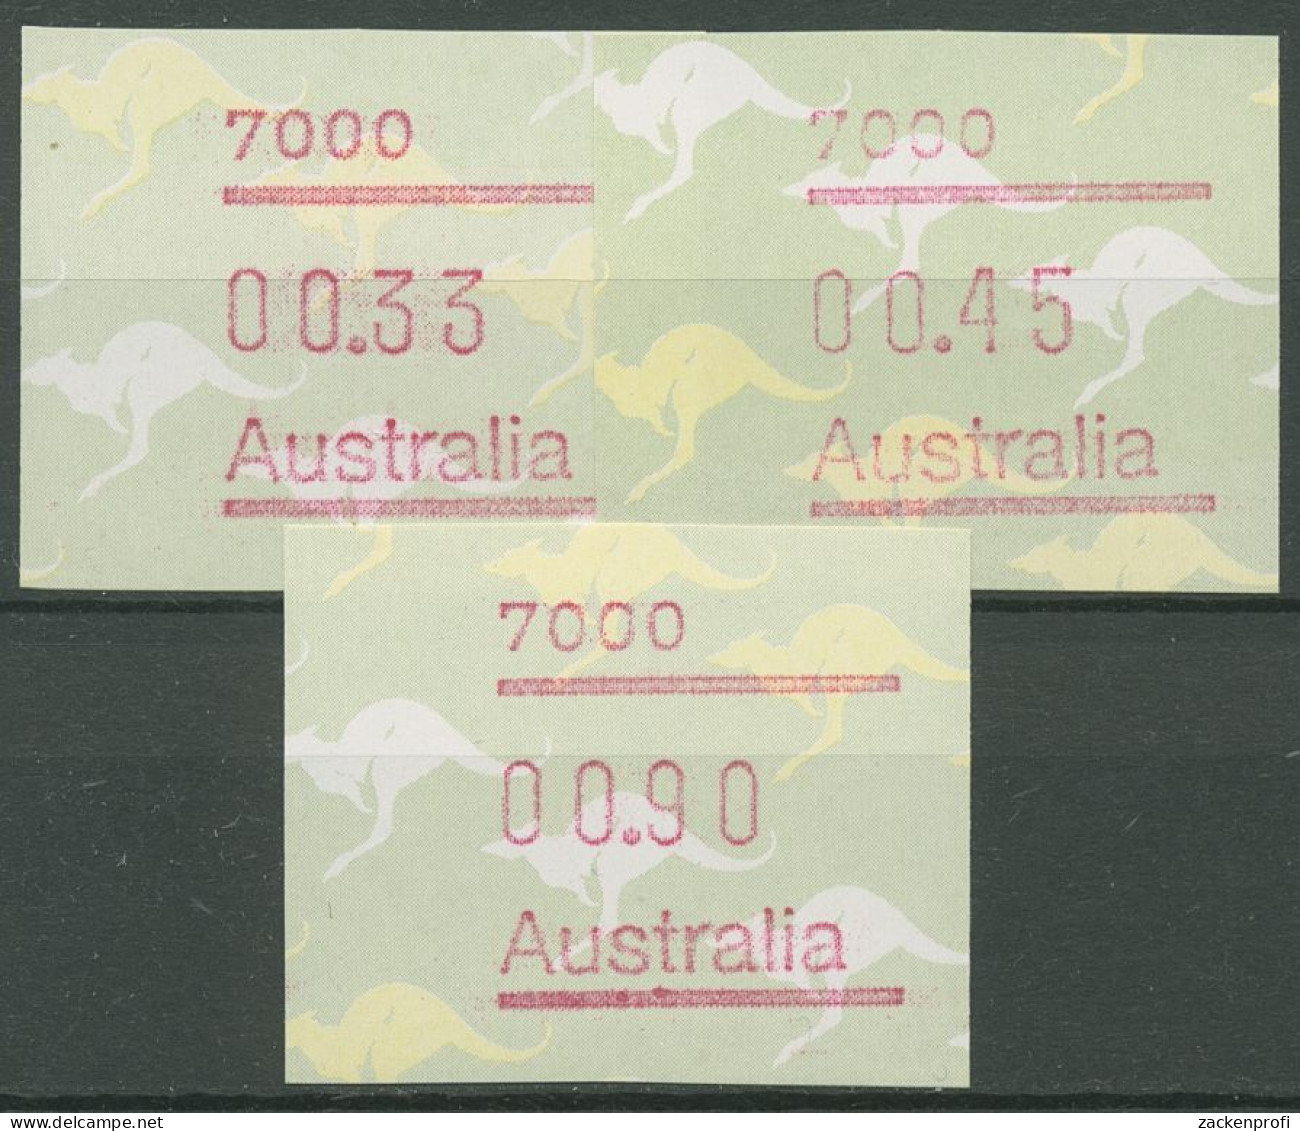 Australien 1985 Känguruh Tastensatz Automatenmarke 4 S1, 7000 Postfrisch - Viñetas De Franqueo [ATM]